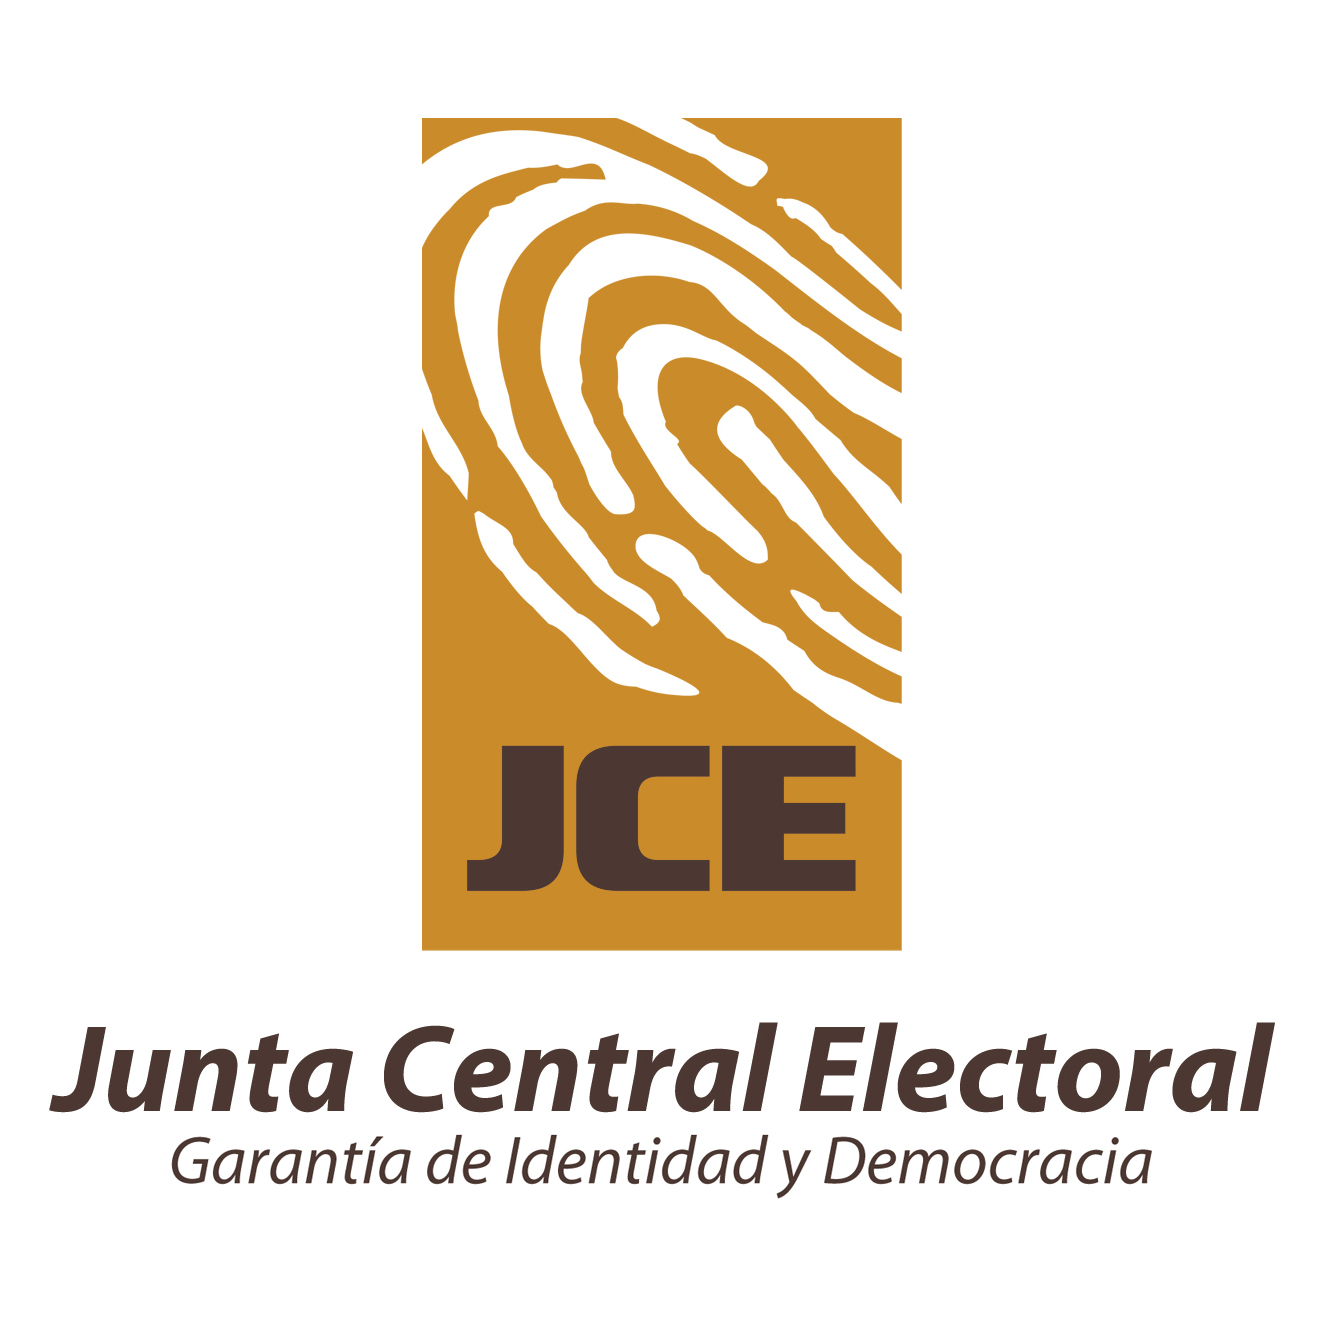 Junta Central Electoral de la República Dominicana (JCE